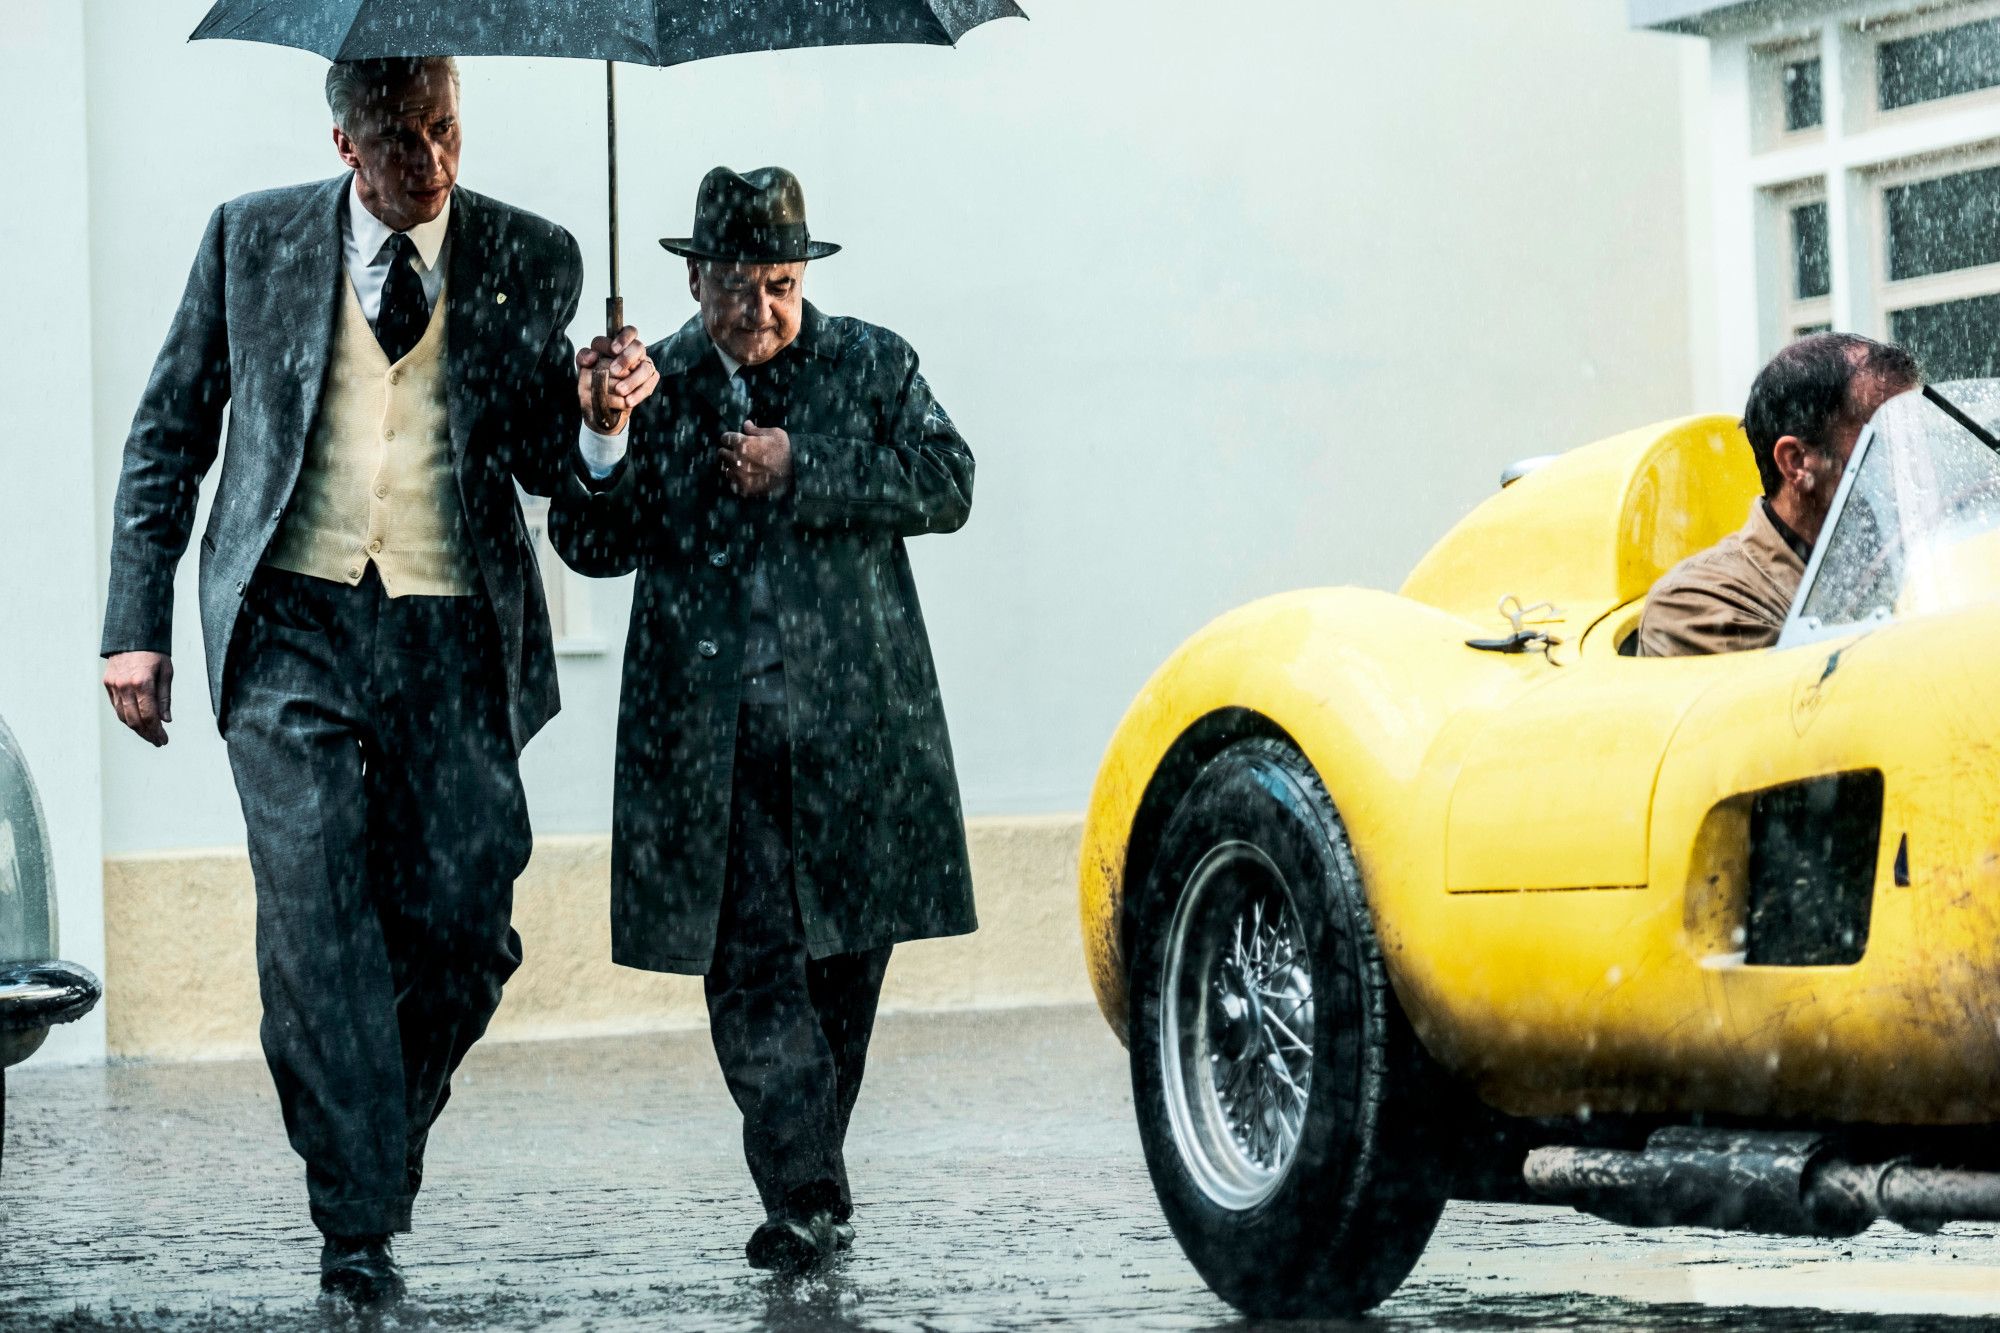 Adam Driver as Enzo Ferrari in Ferrari walking under an umbrella in the rain with another man next to a yellow 1950s race car